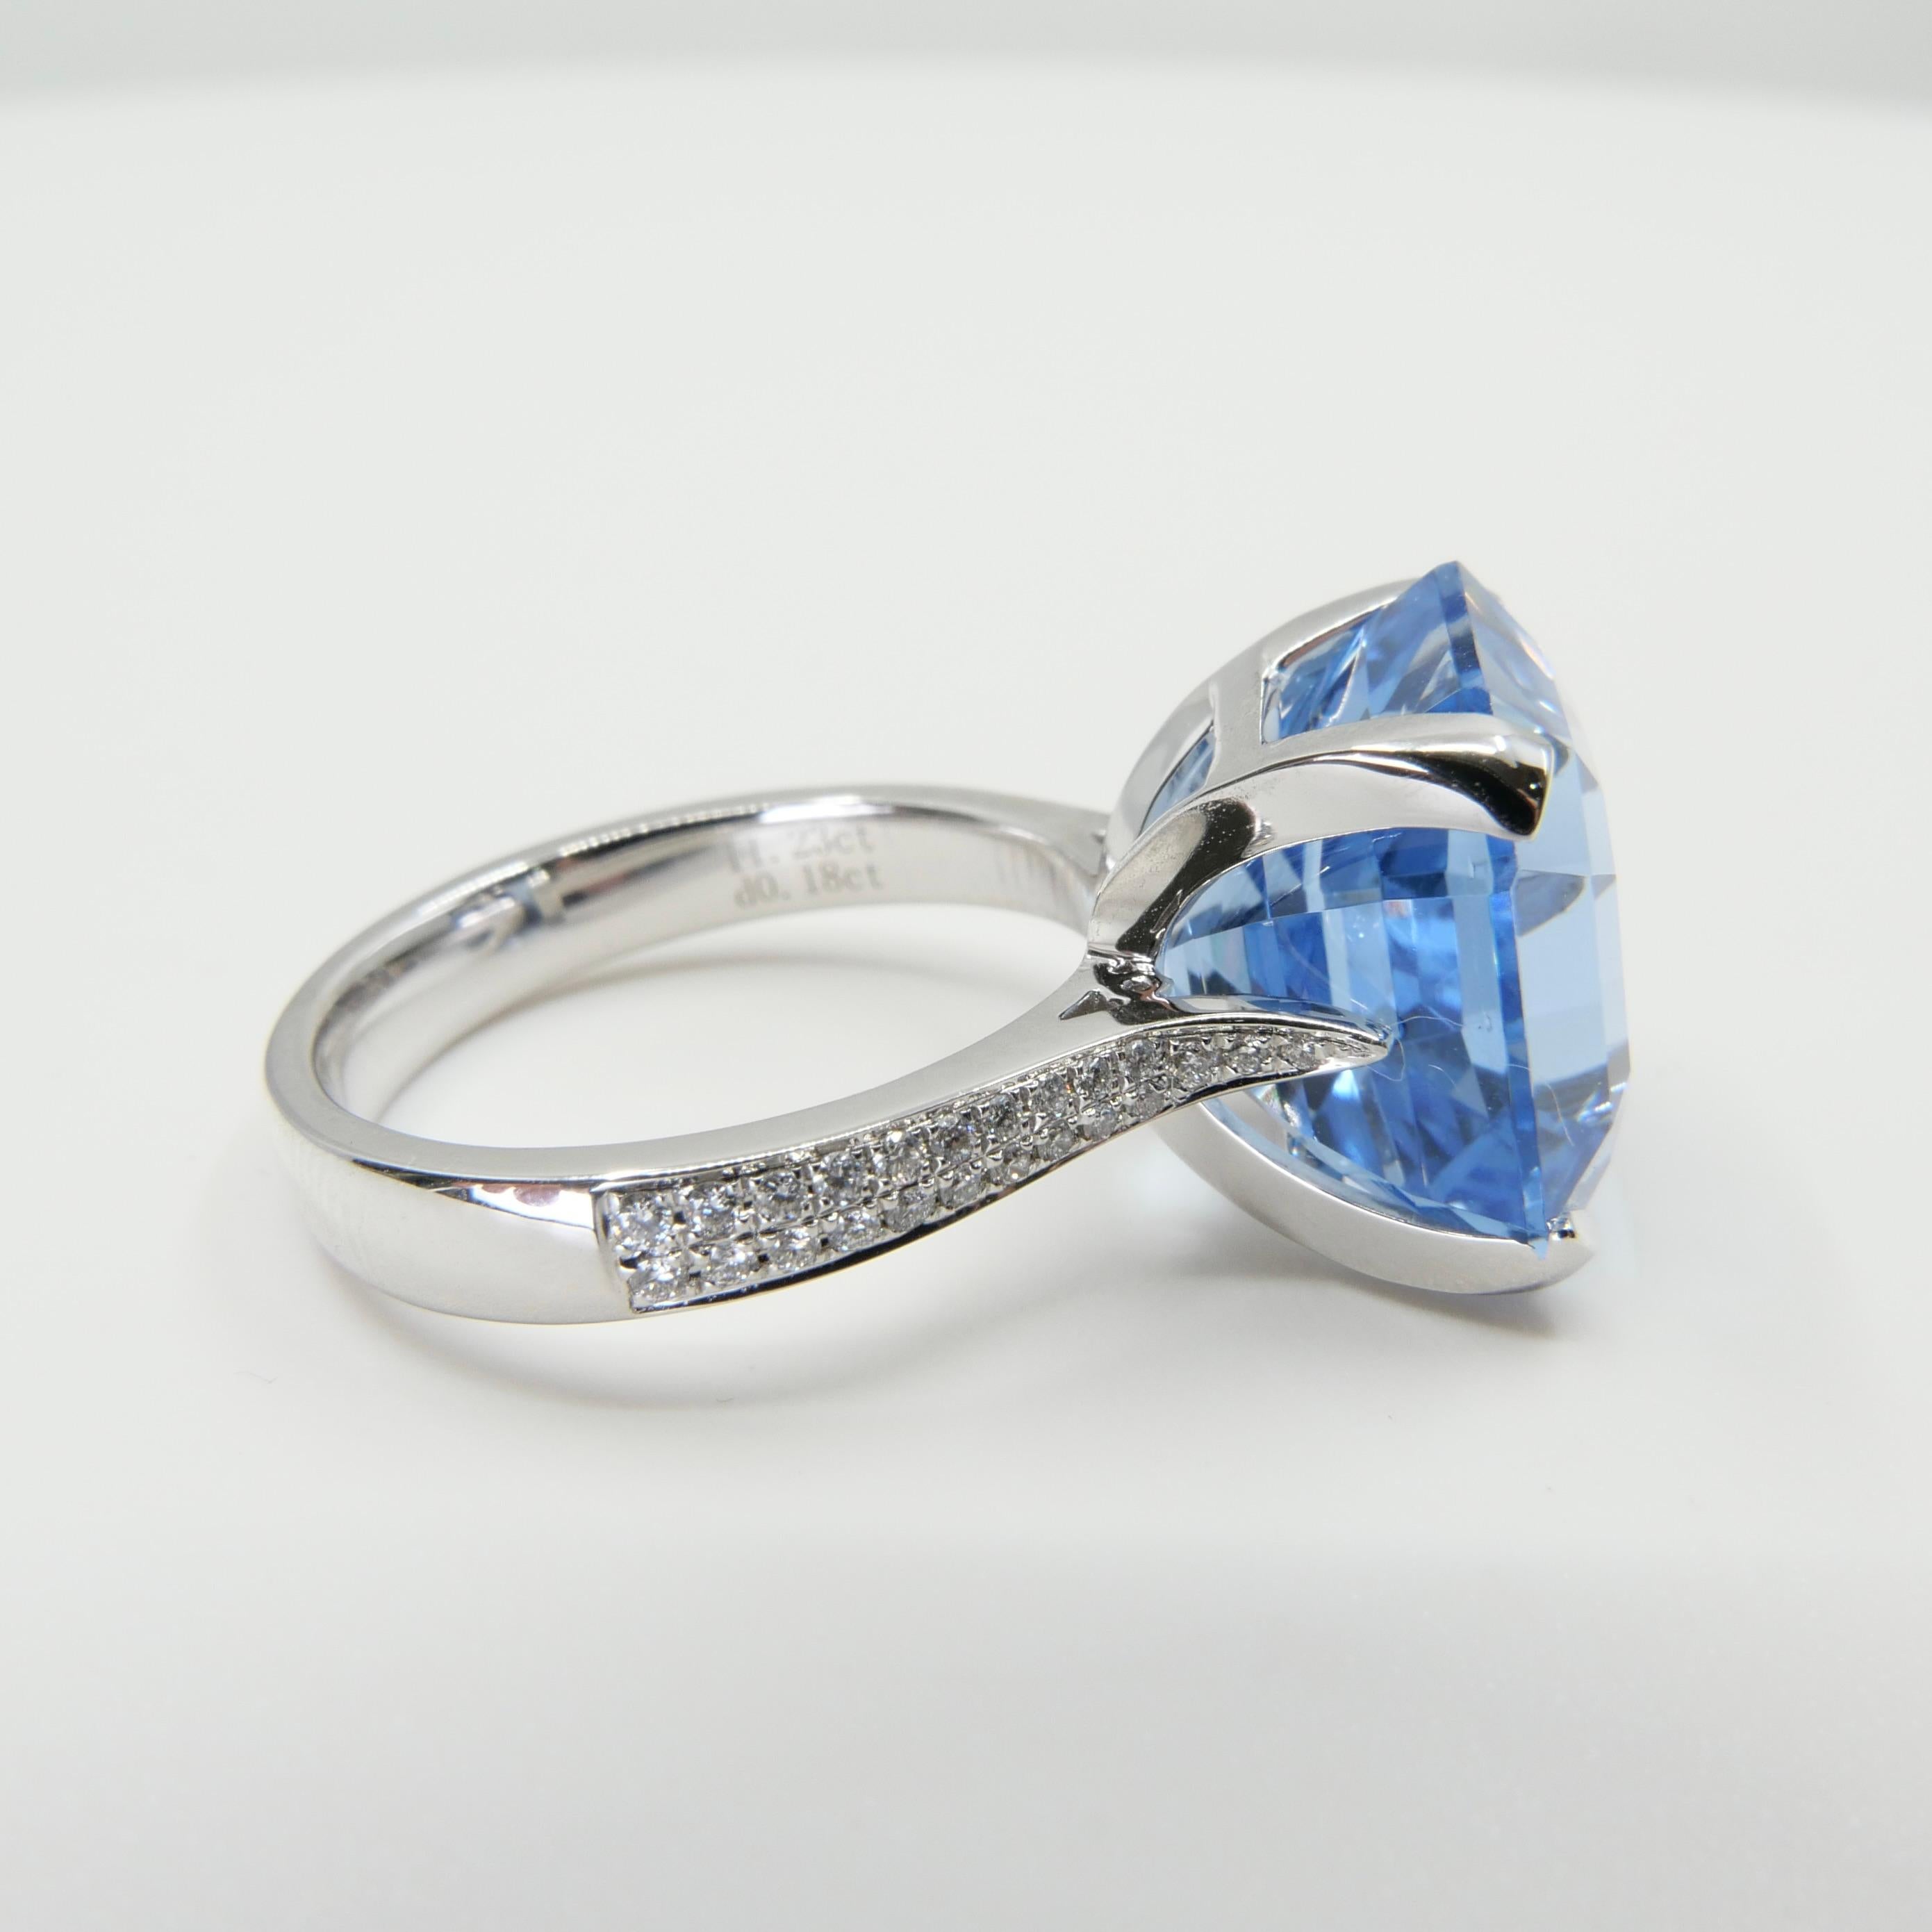 Certified 11.23 Cts Asscher Cut Aquamarine Diamond Ring, True Santa Maria Color 11